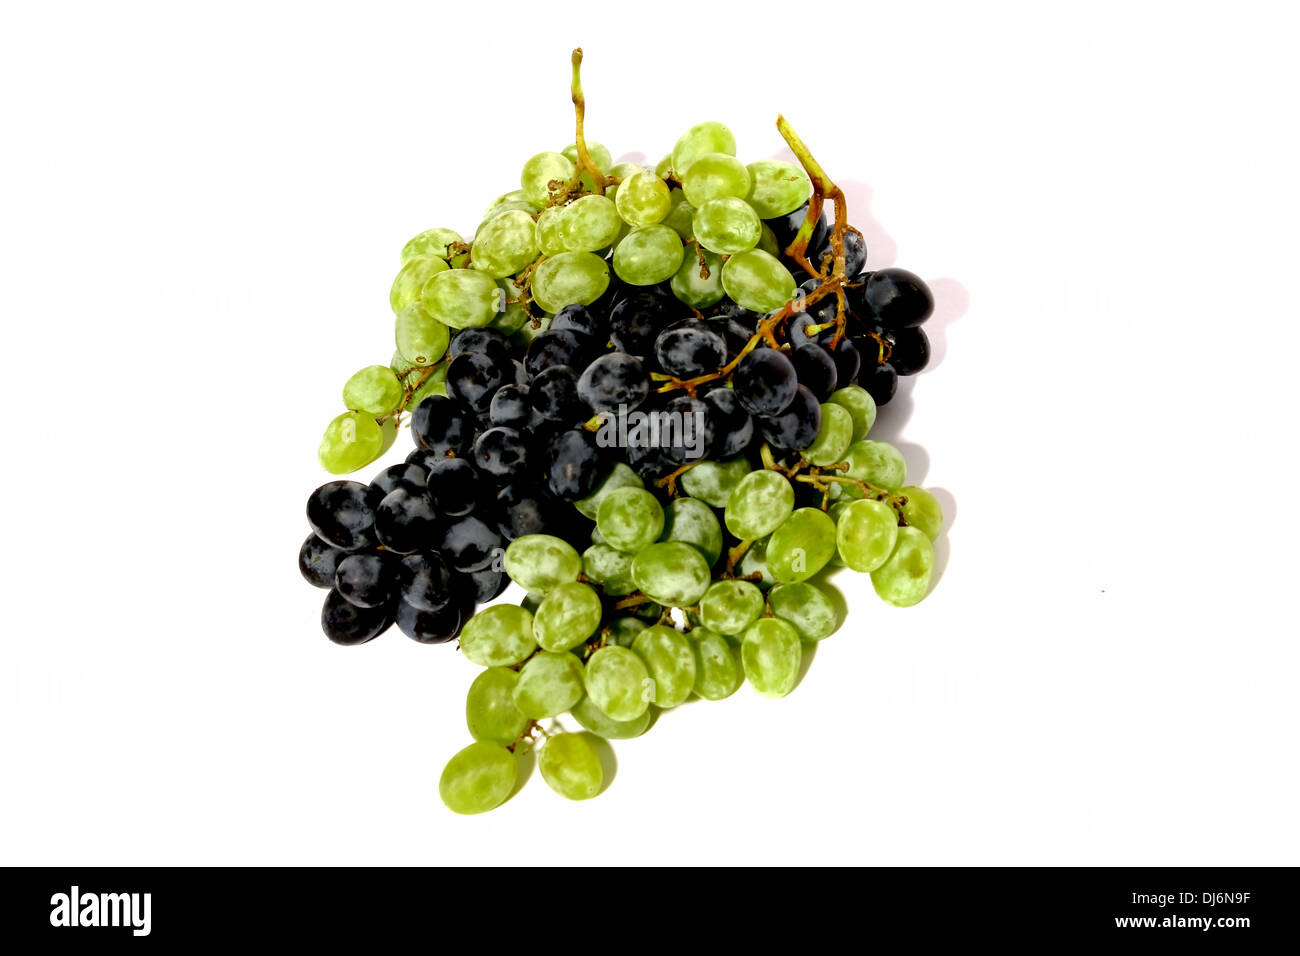 Racimo de uvas de color azul oscuro, racimos de uvas blancas, bodegón, синего гроздь винограда, белого гроздья винограда, натюрморт Foto de stock